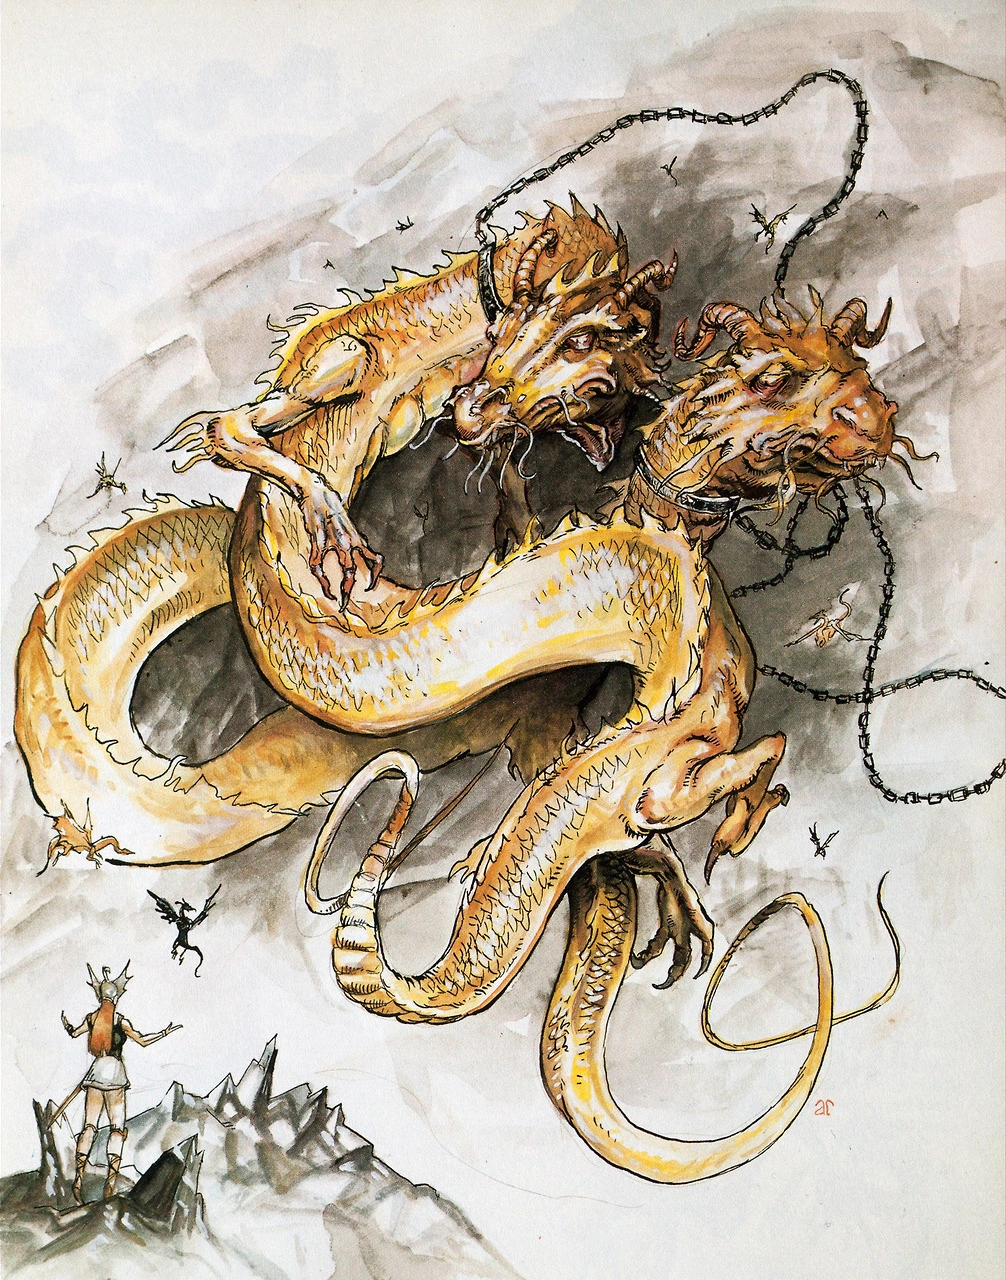 Astral dragon | Forgotten Realms Wiki | Fandom